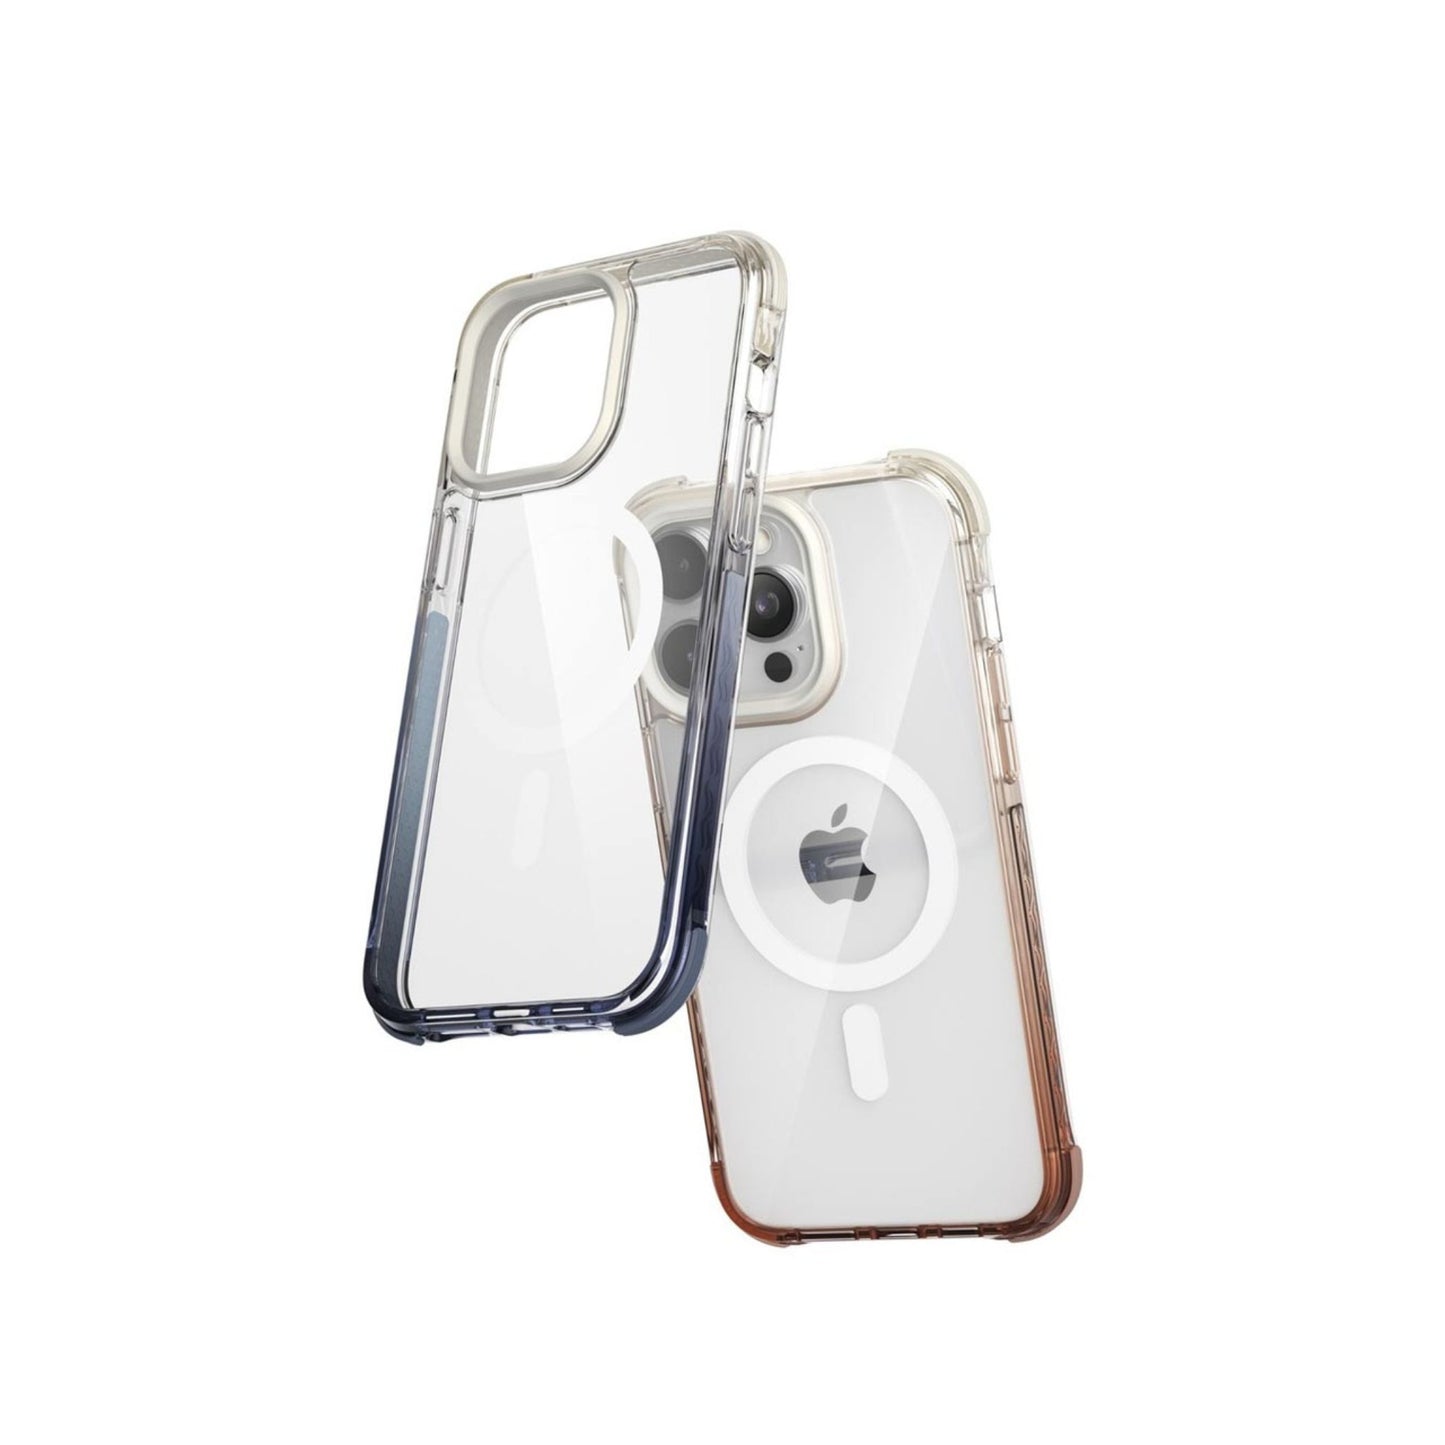 Green Lion MagSafe Gradio Case_iPhone 15 Pro Max and 15 Pro_Gray/Orange